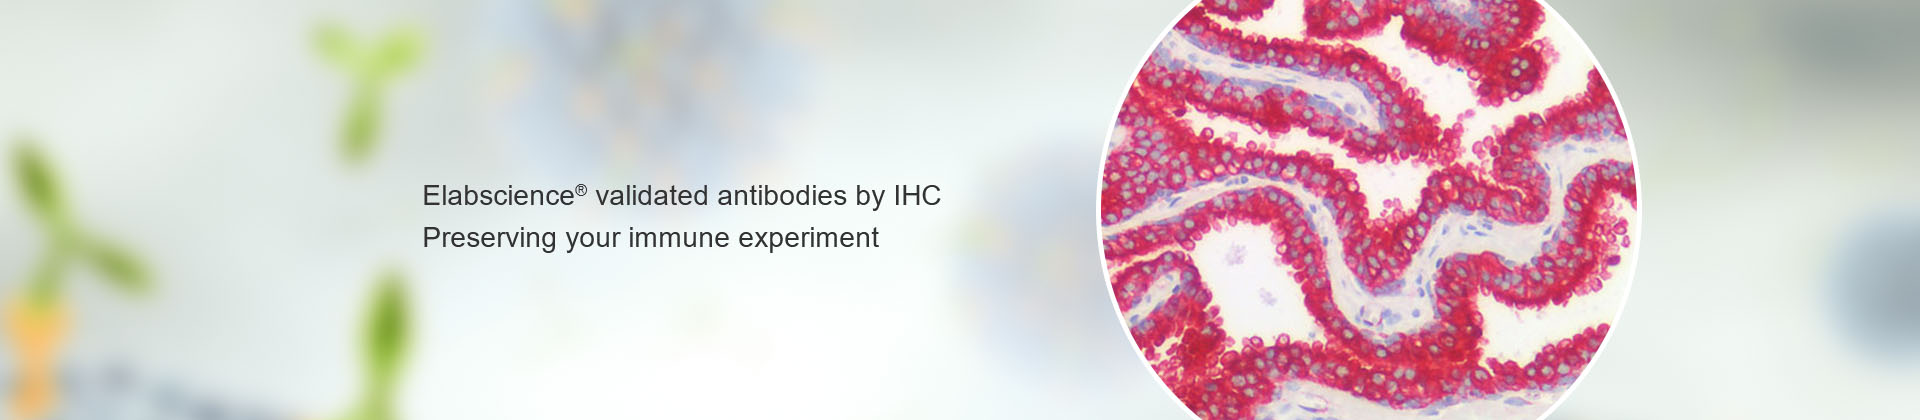 IHC validated antibody